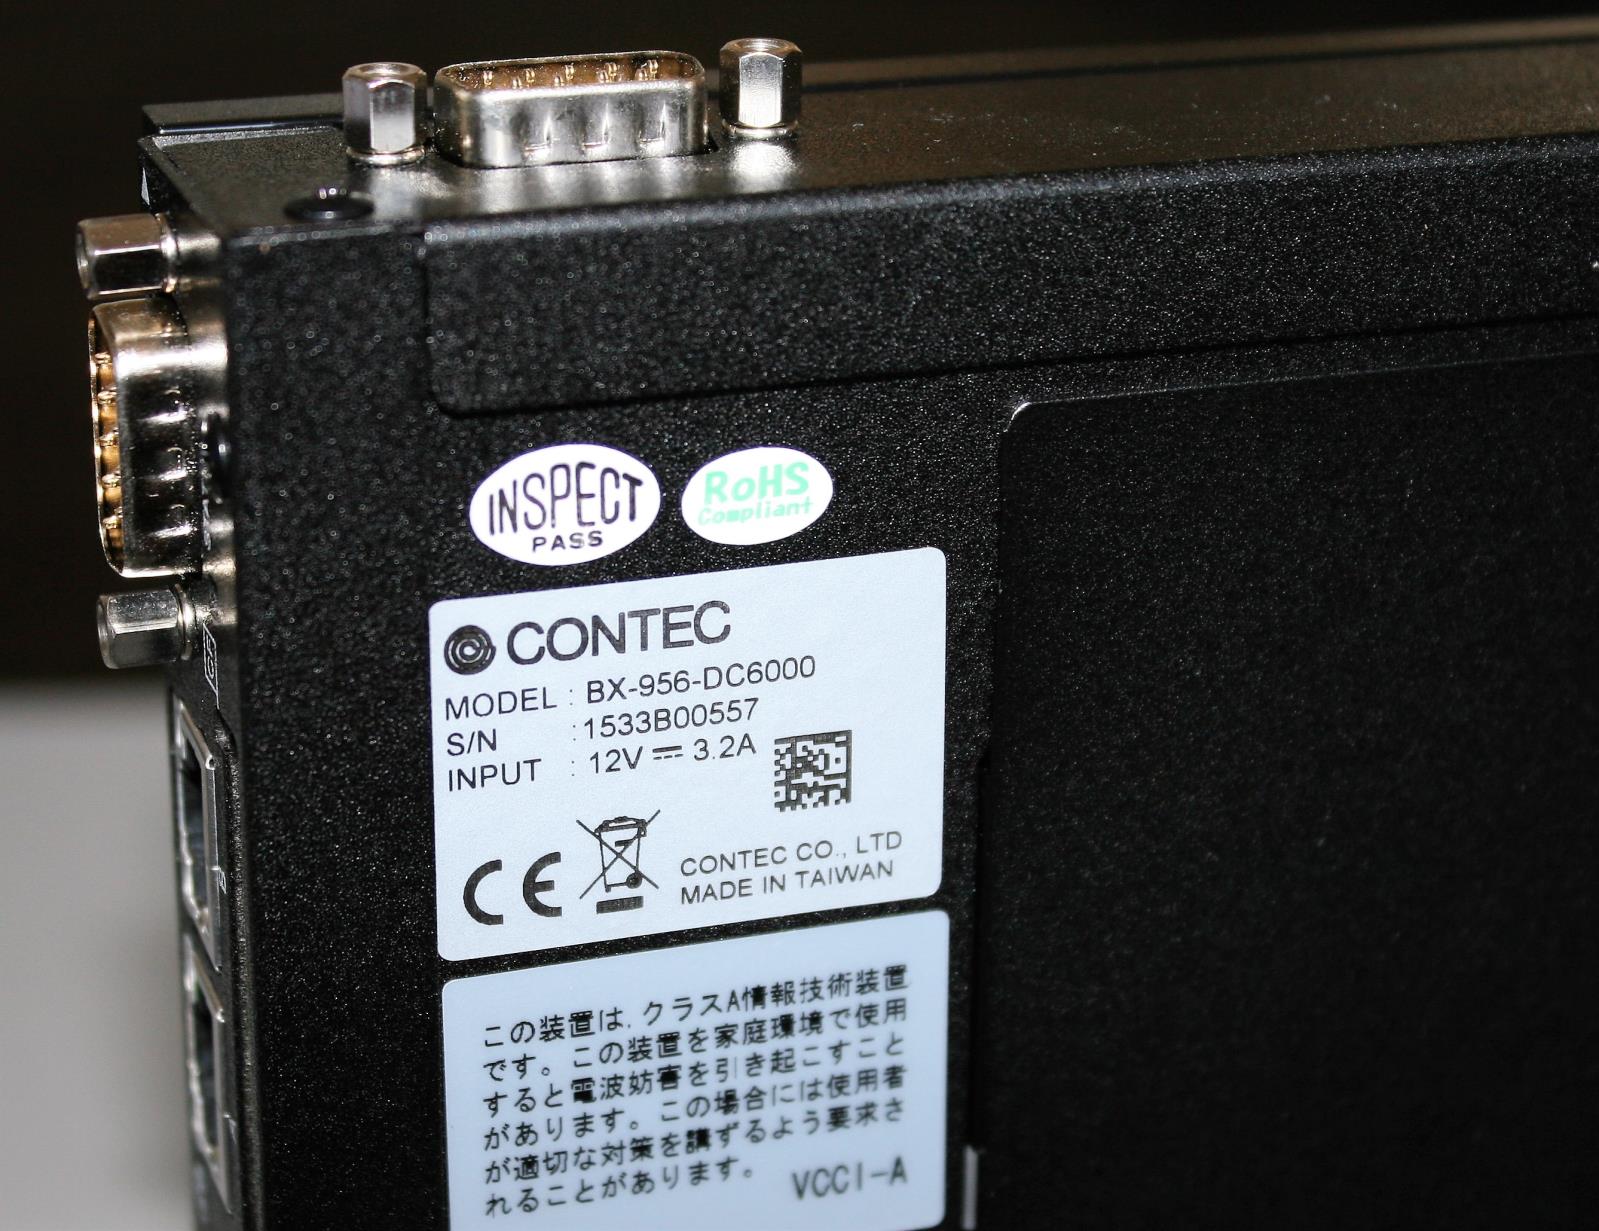 CONTEC DTx Industrial Thin Client BX-956-DC6000 1.66GHz 2GB RAM